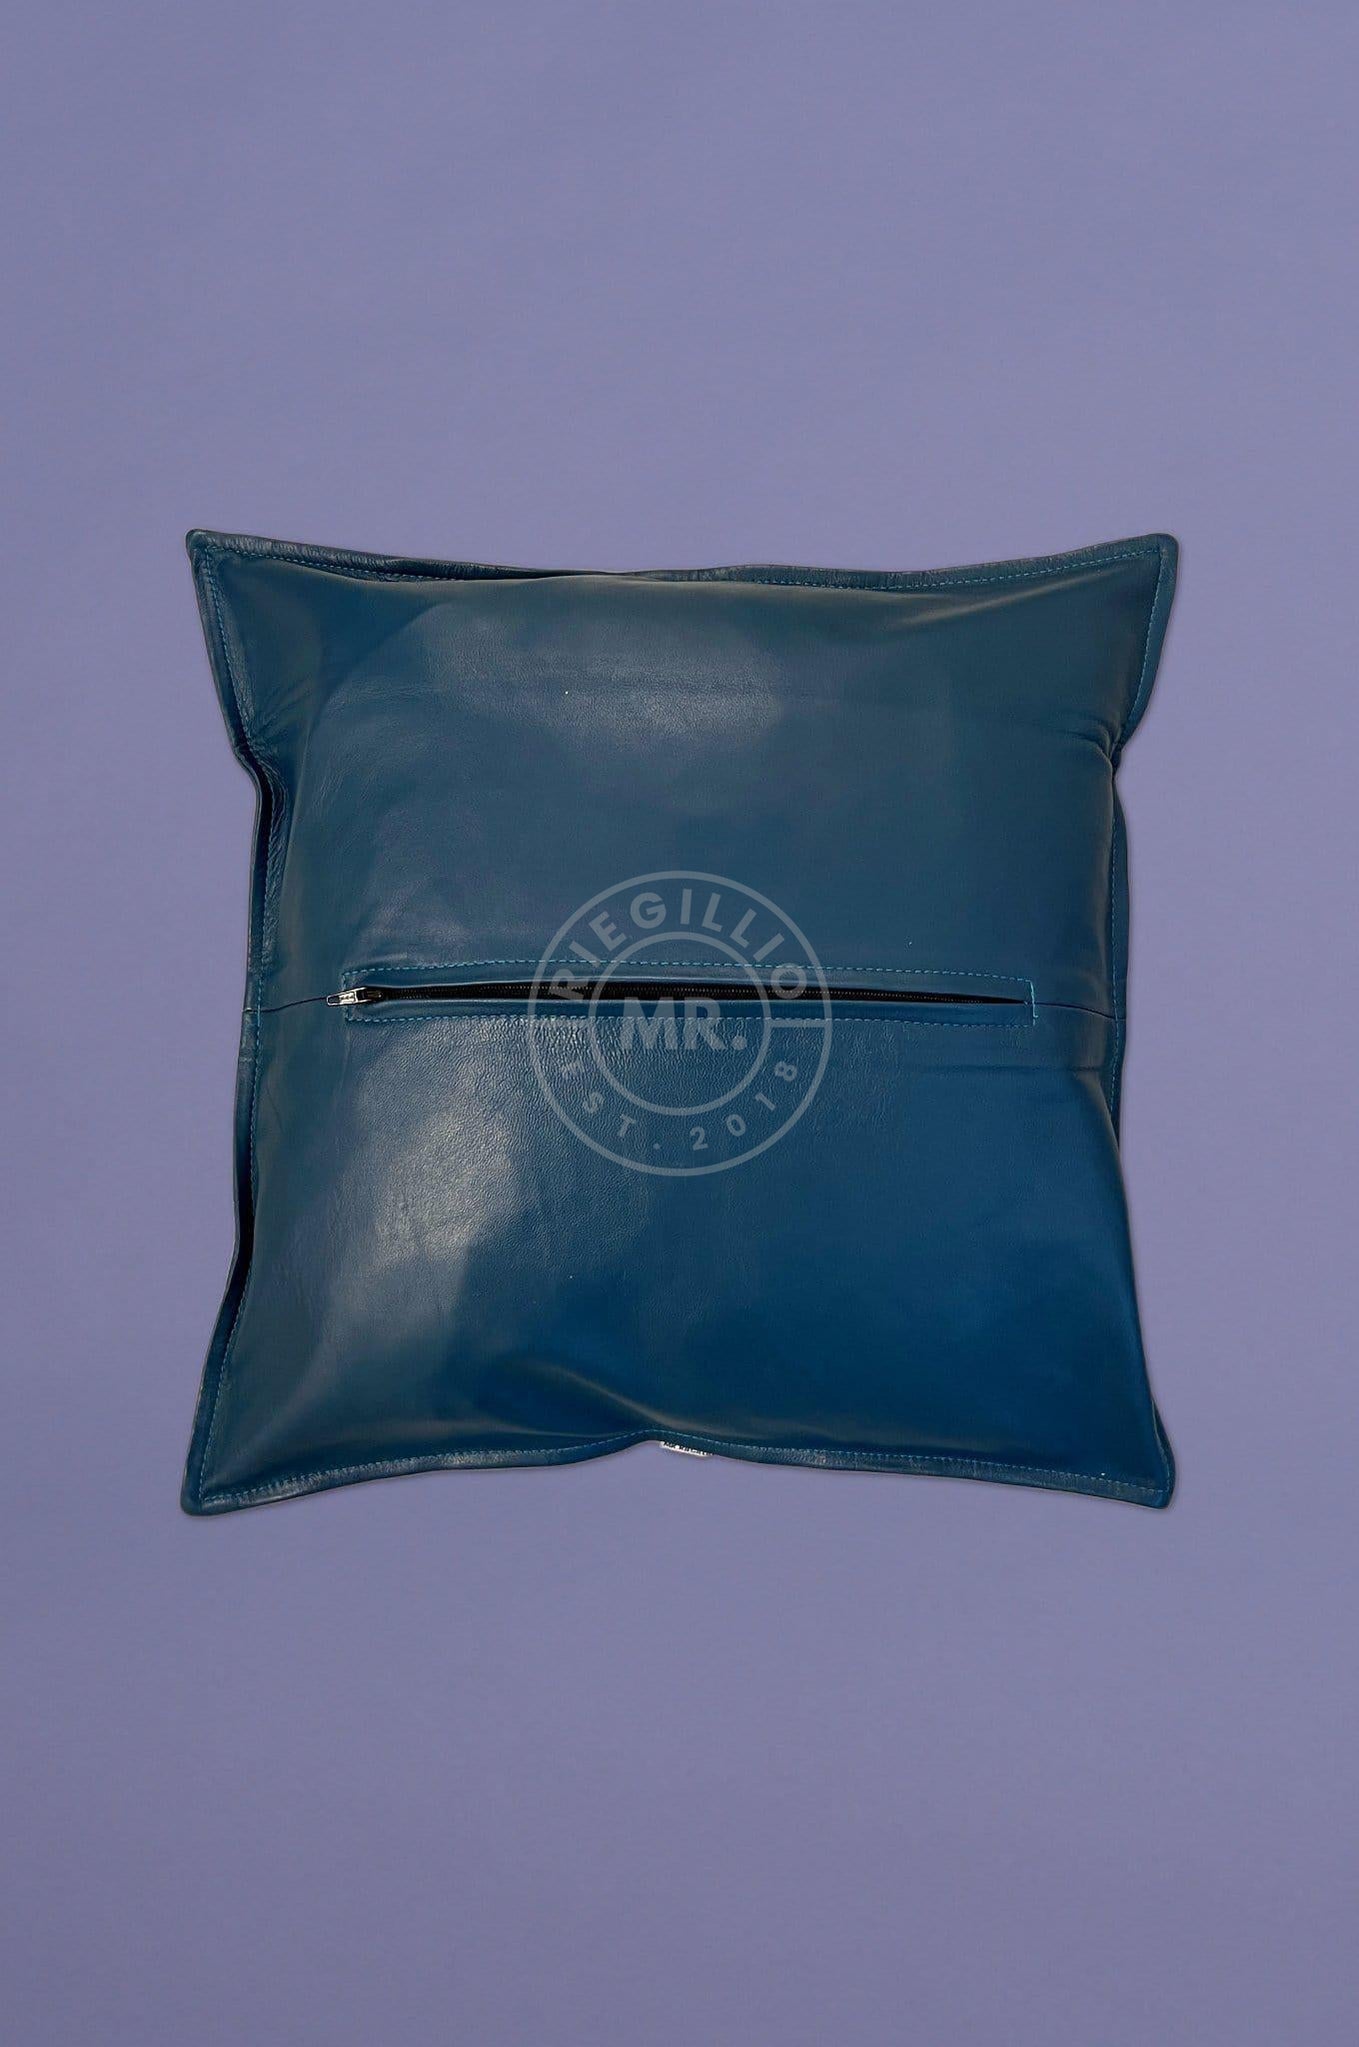 Jeans Blue Leather Pillow at MR. Riegillio